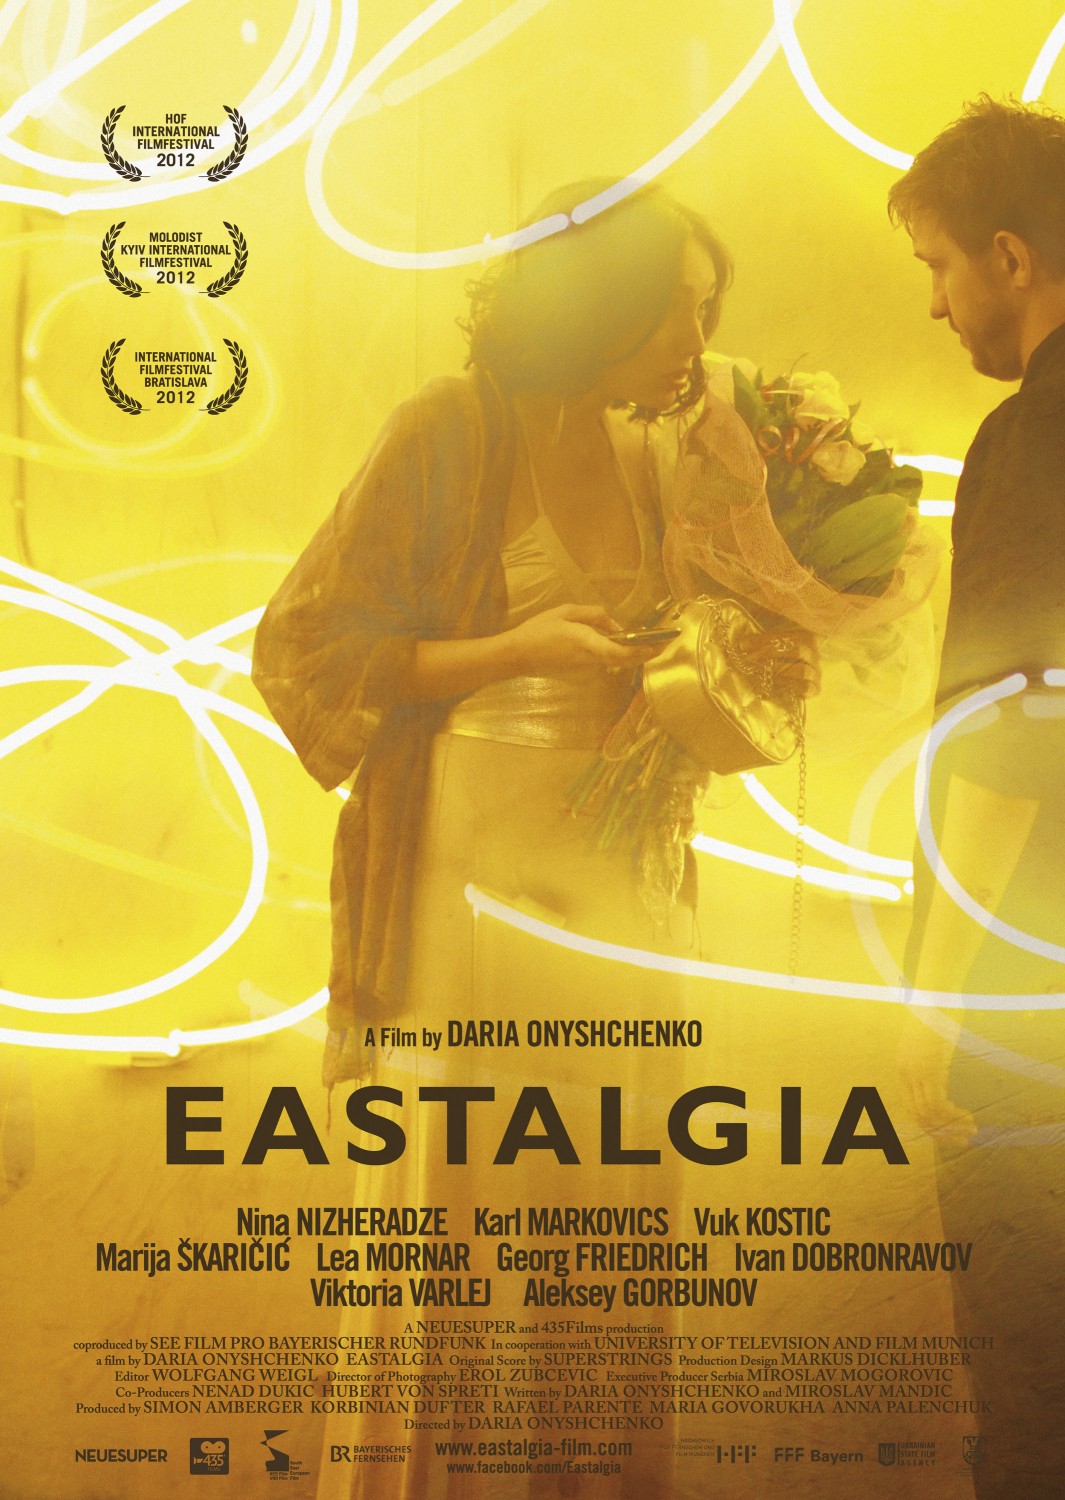 Extra Large Movie Poster Image for Eastalgia 